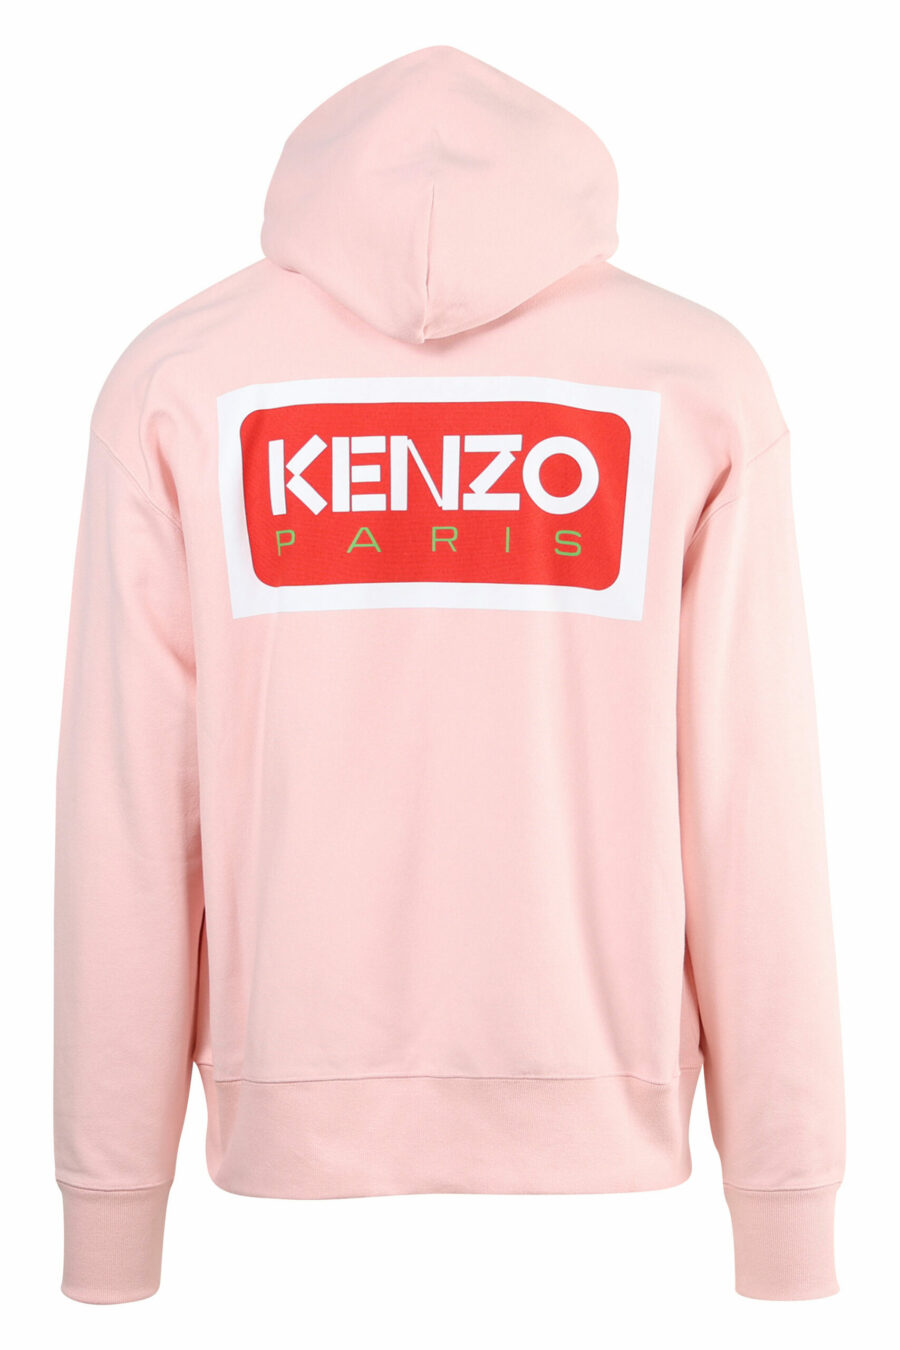 Pink hooded sweatshirt with "kenzo paris" maxilogo on the back - 3612230537439 1 scaled